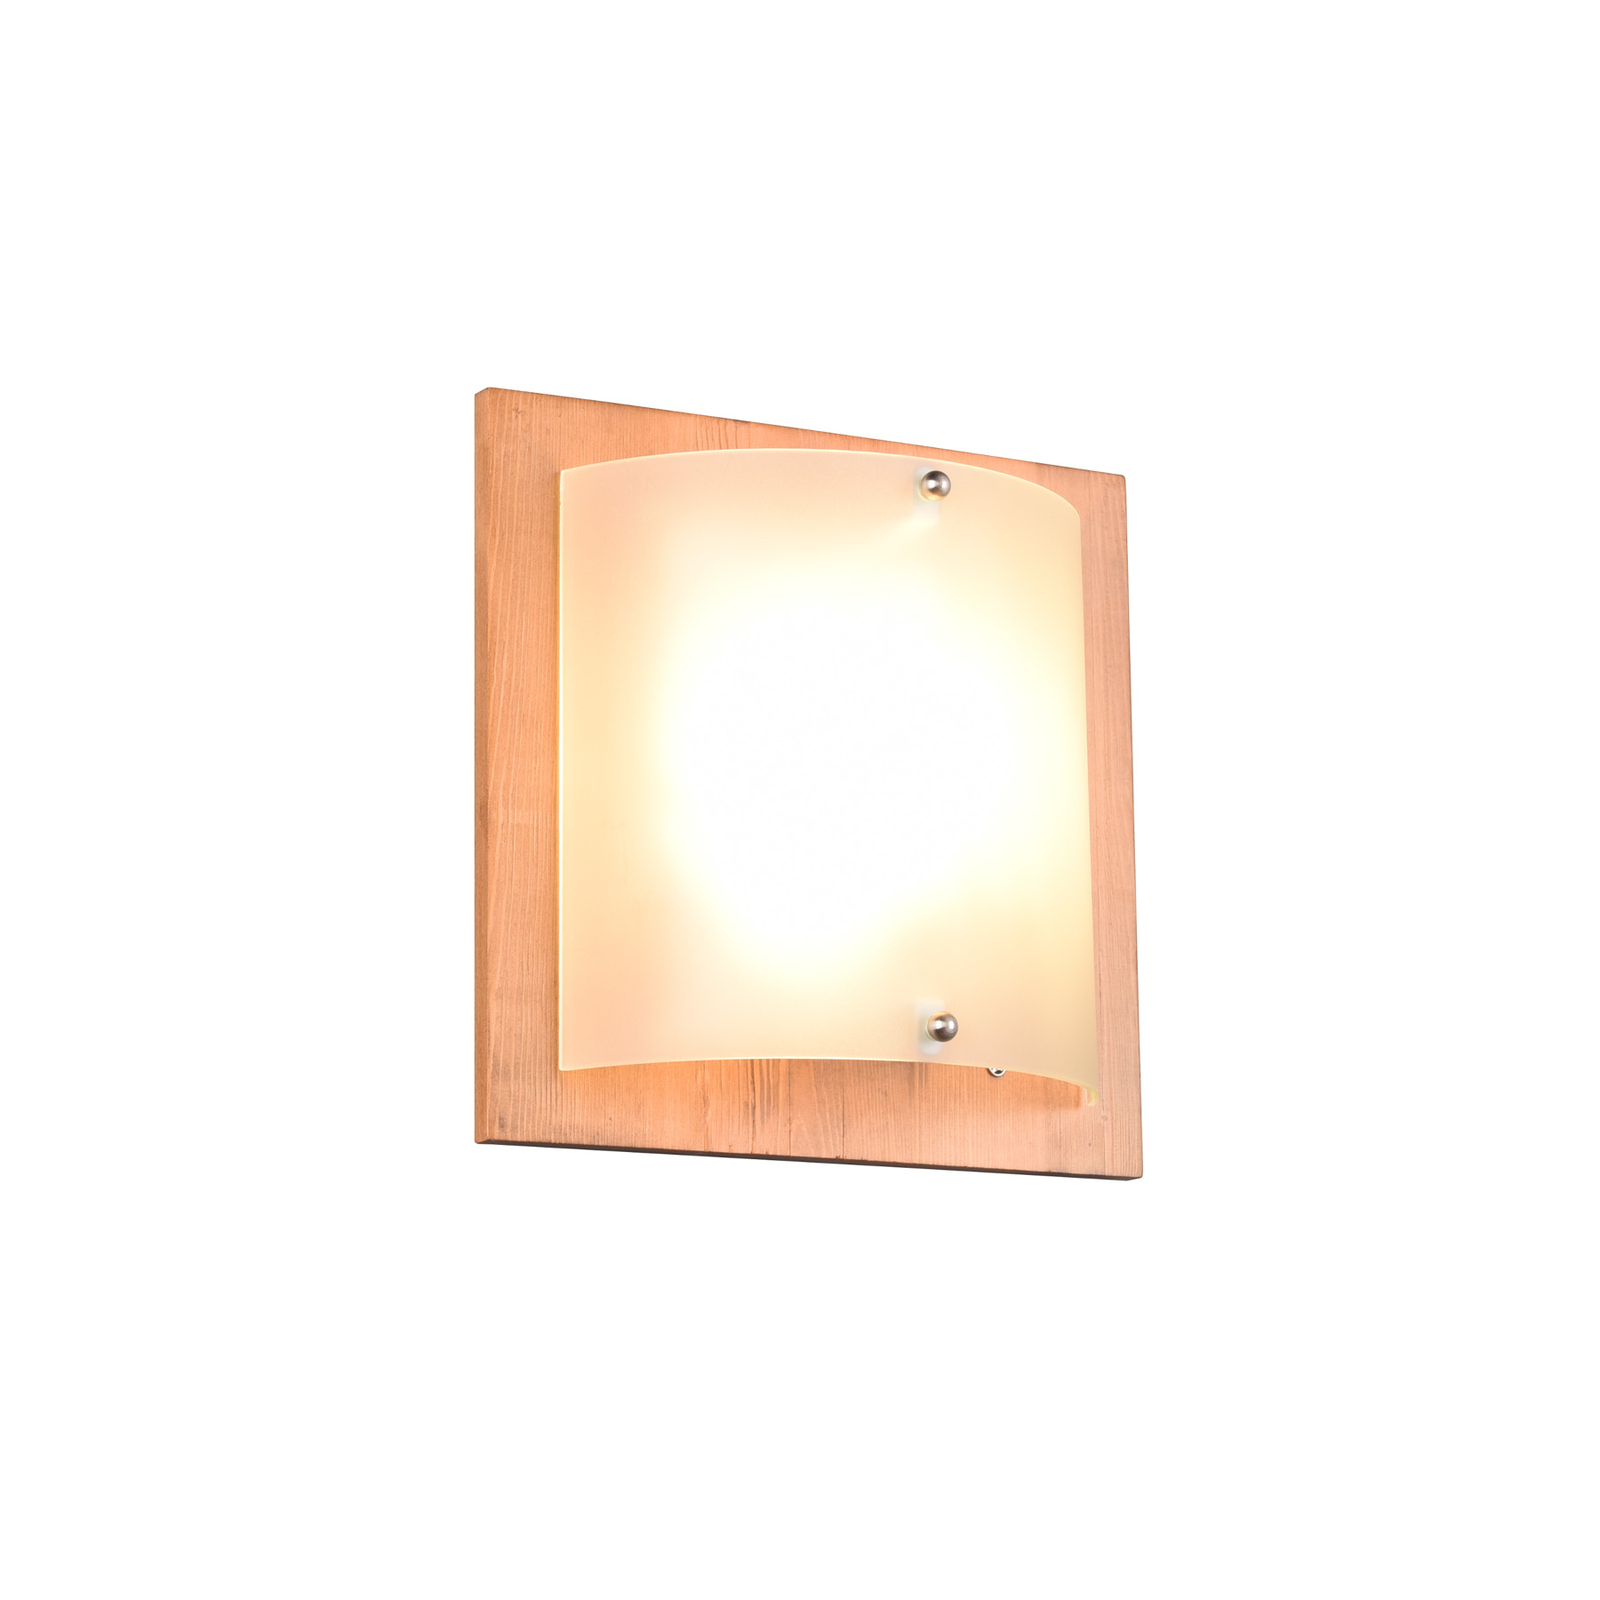 Pali wall light, light wood/white, height 25 cm